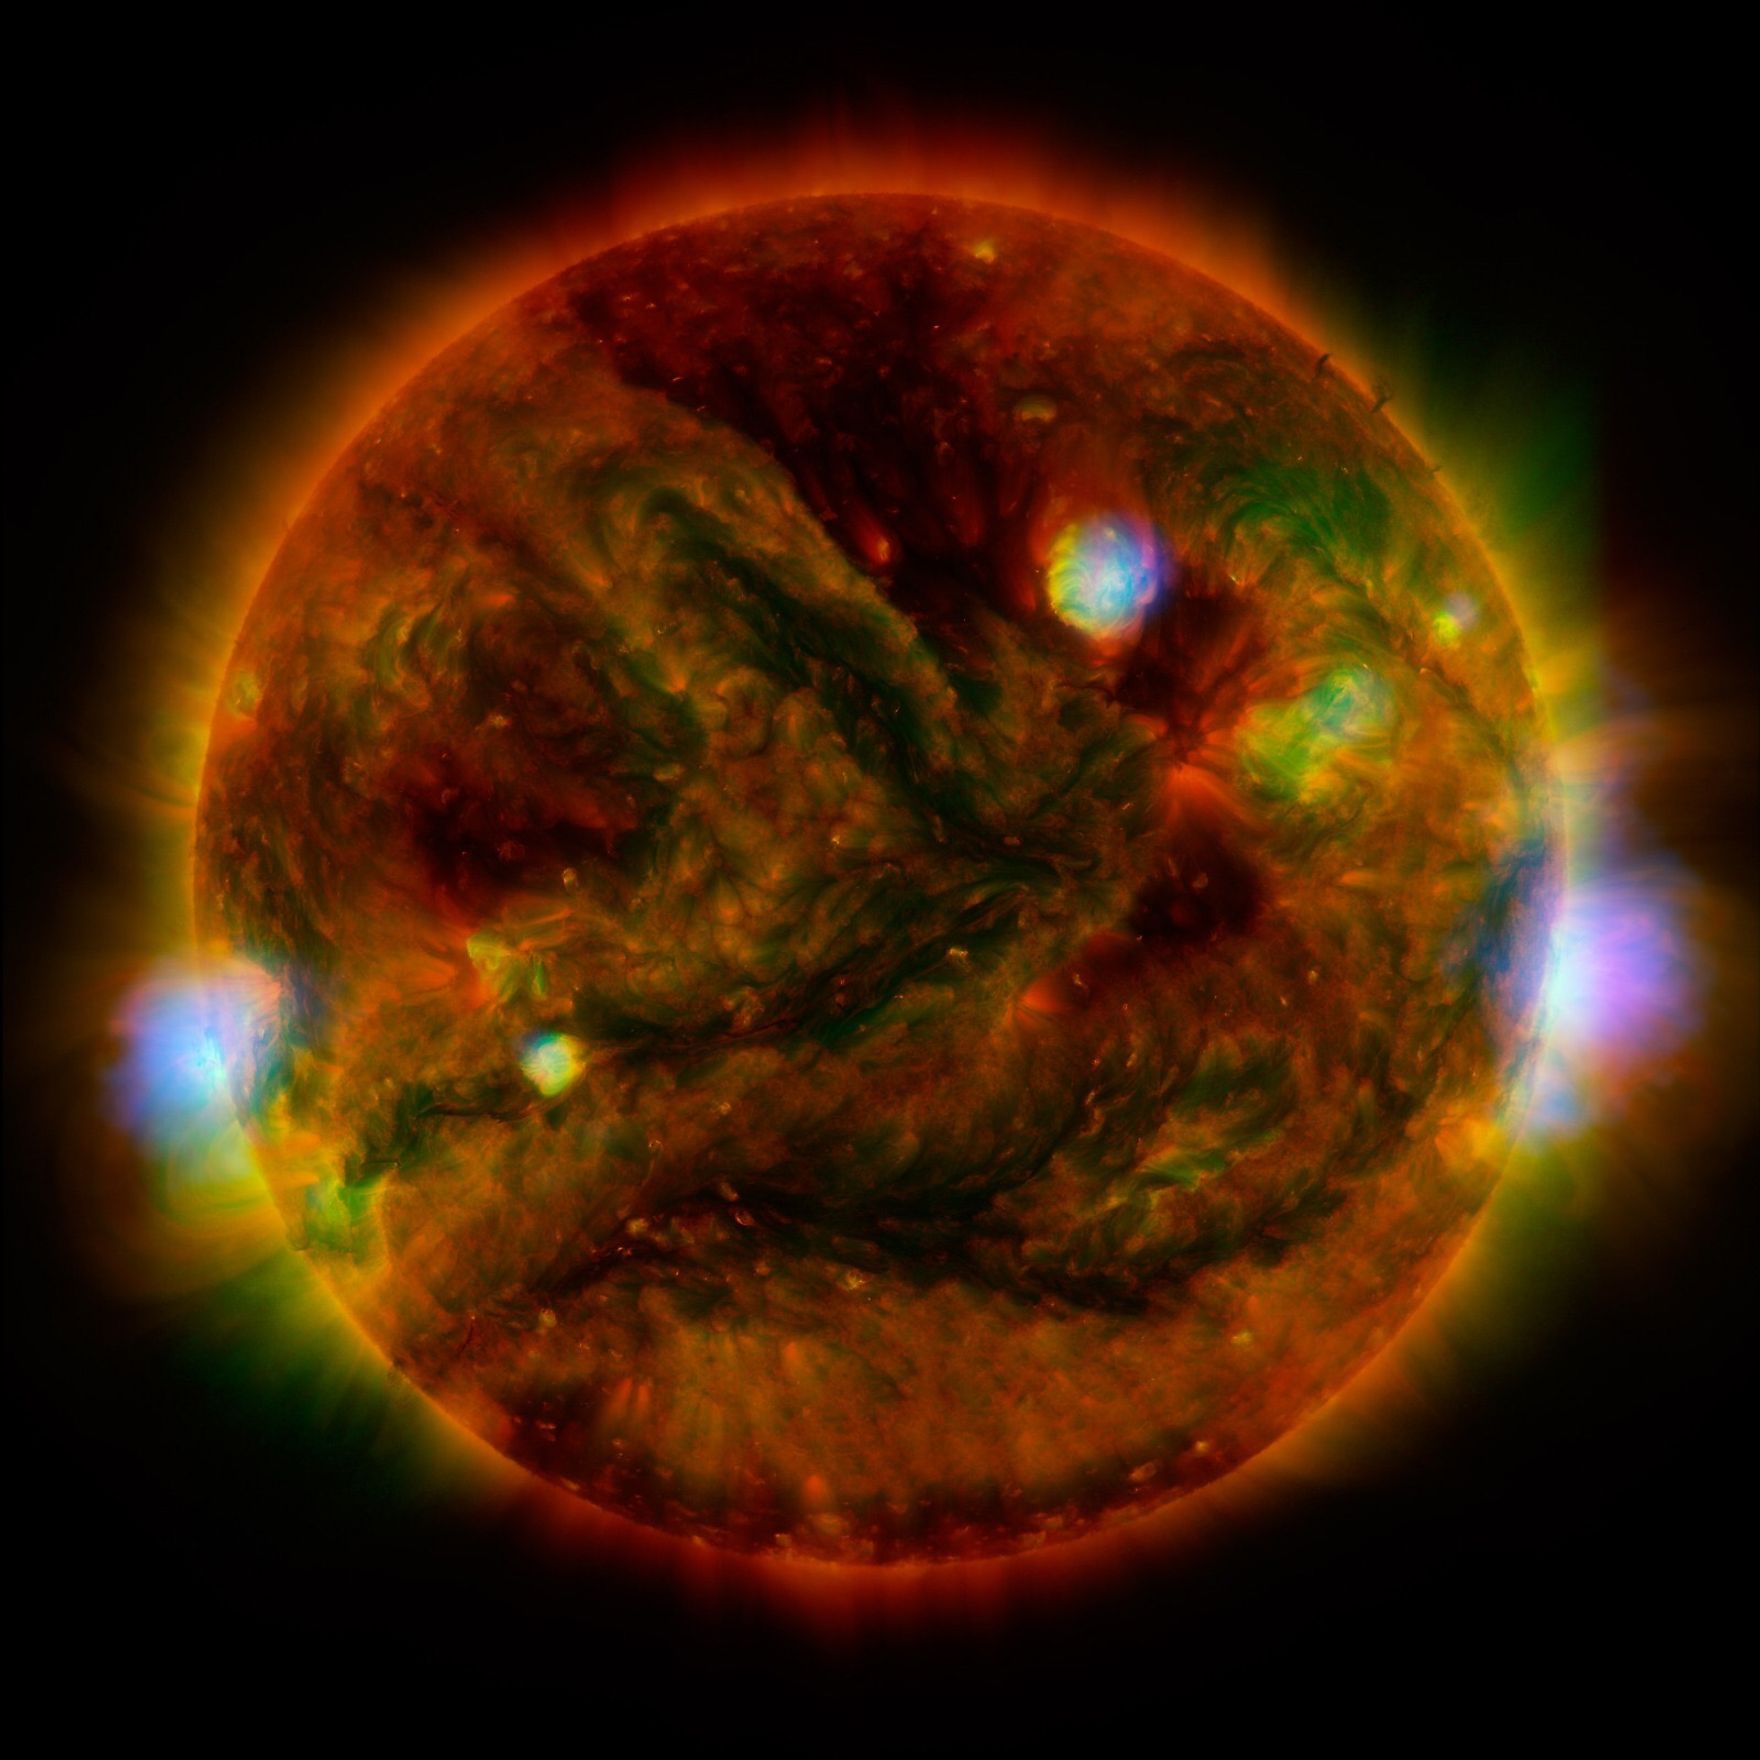 X-ray image of the sun. Image credit: NASA